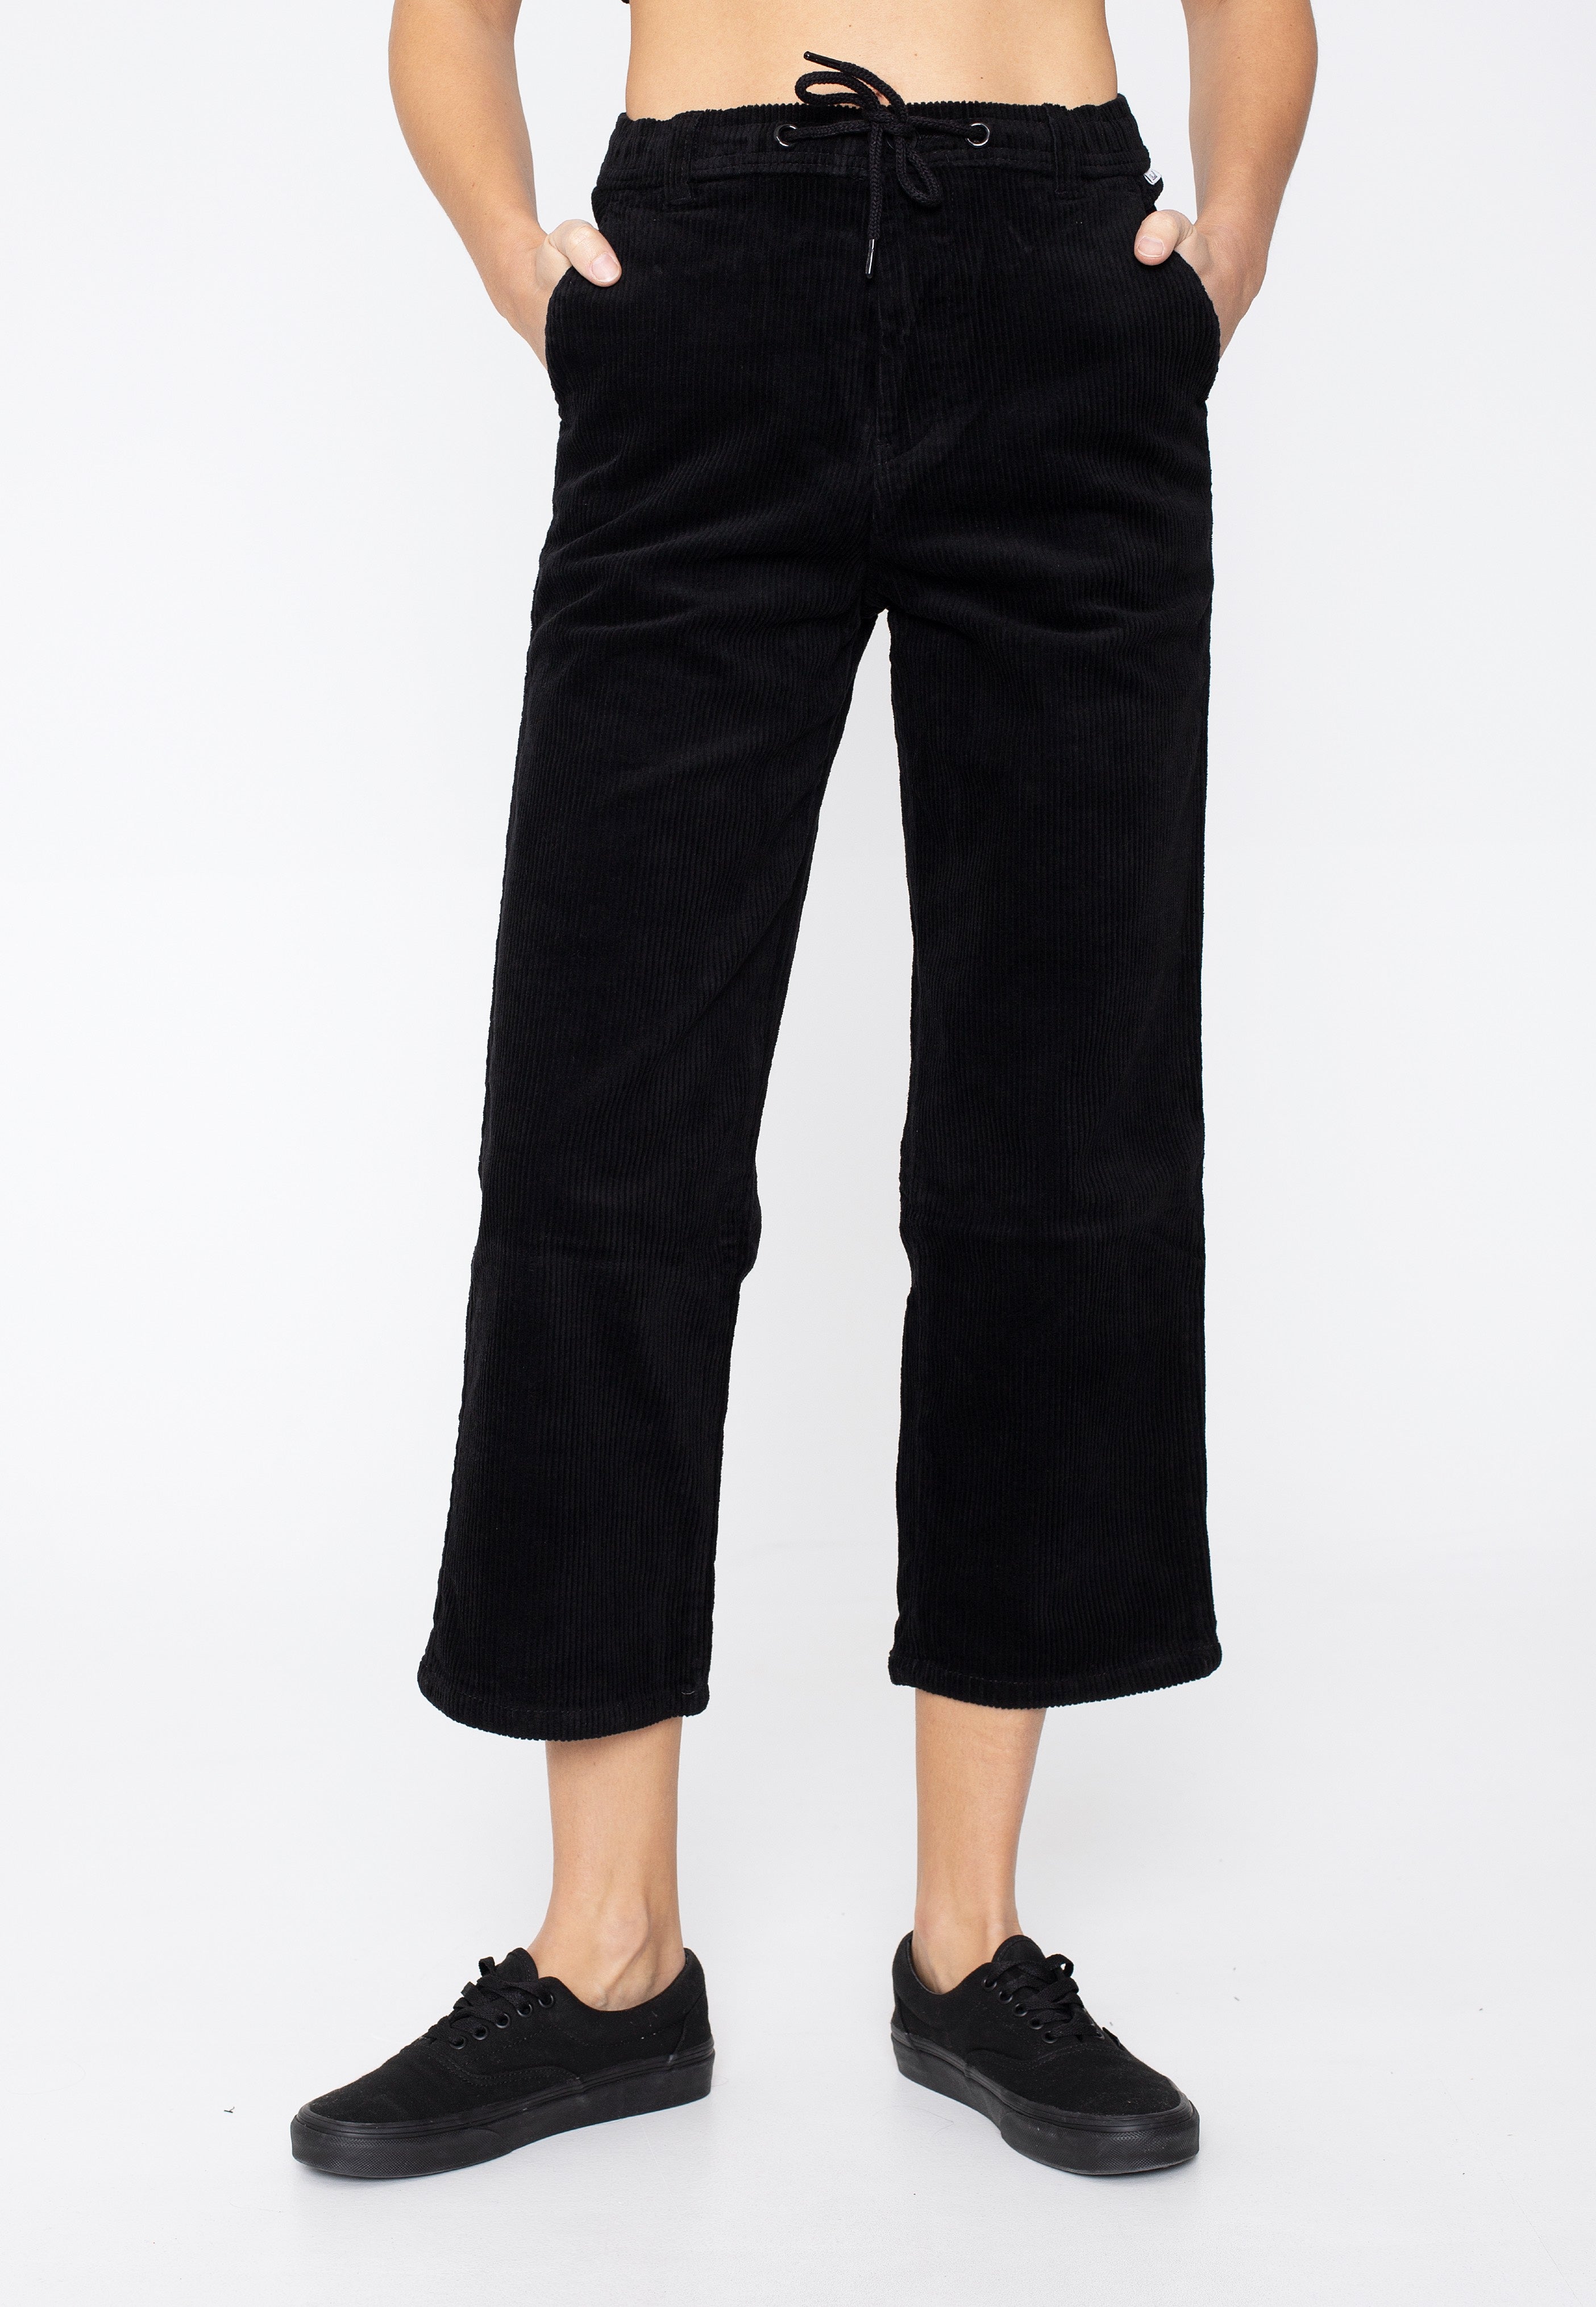 REELL - Reflex Women Loose Chino Black Cord - Pants